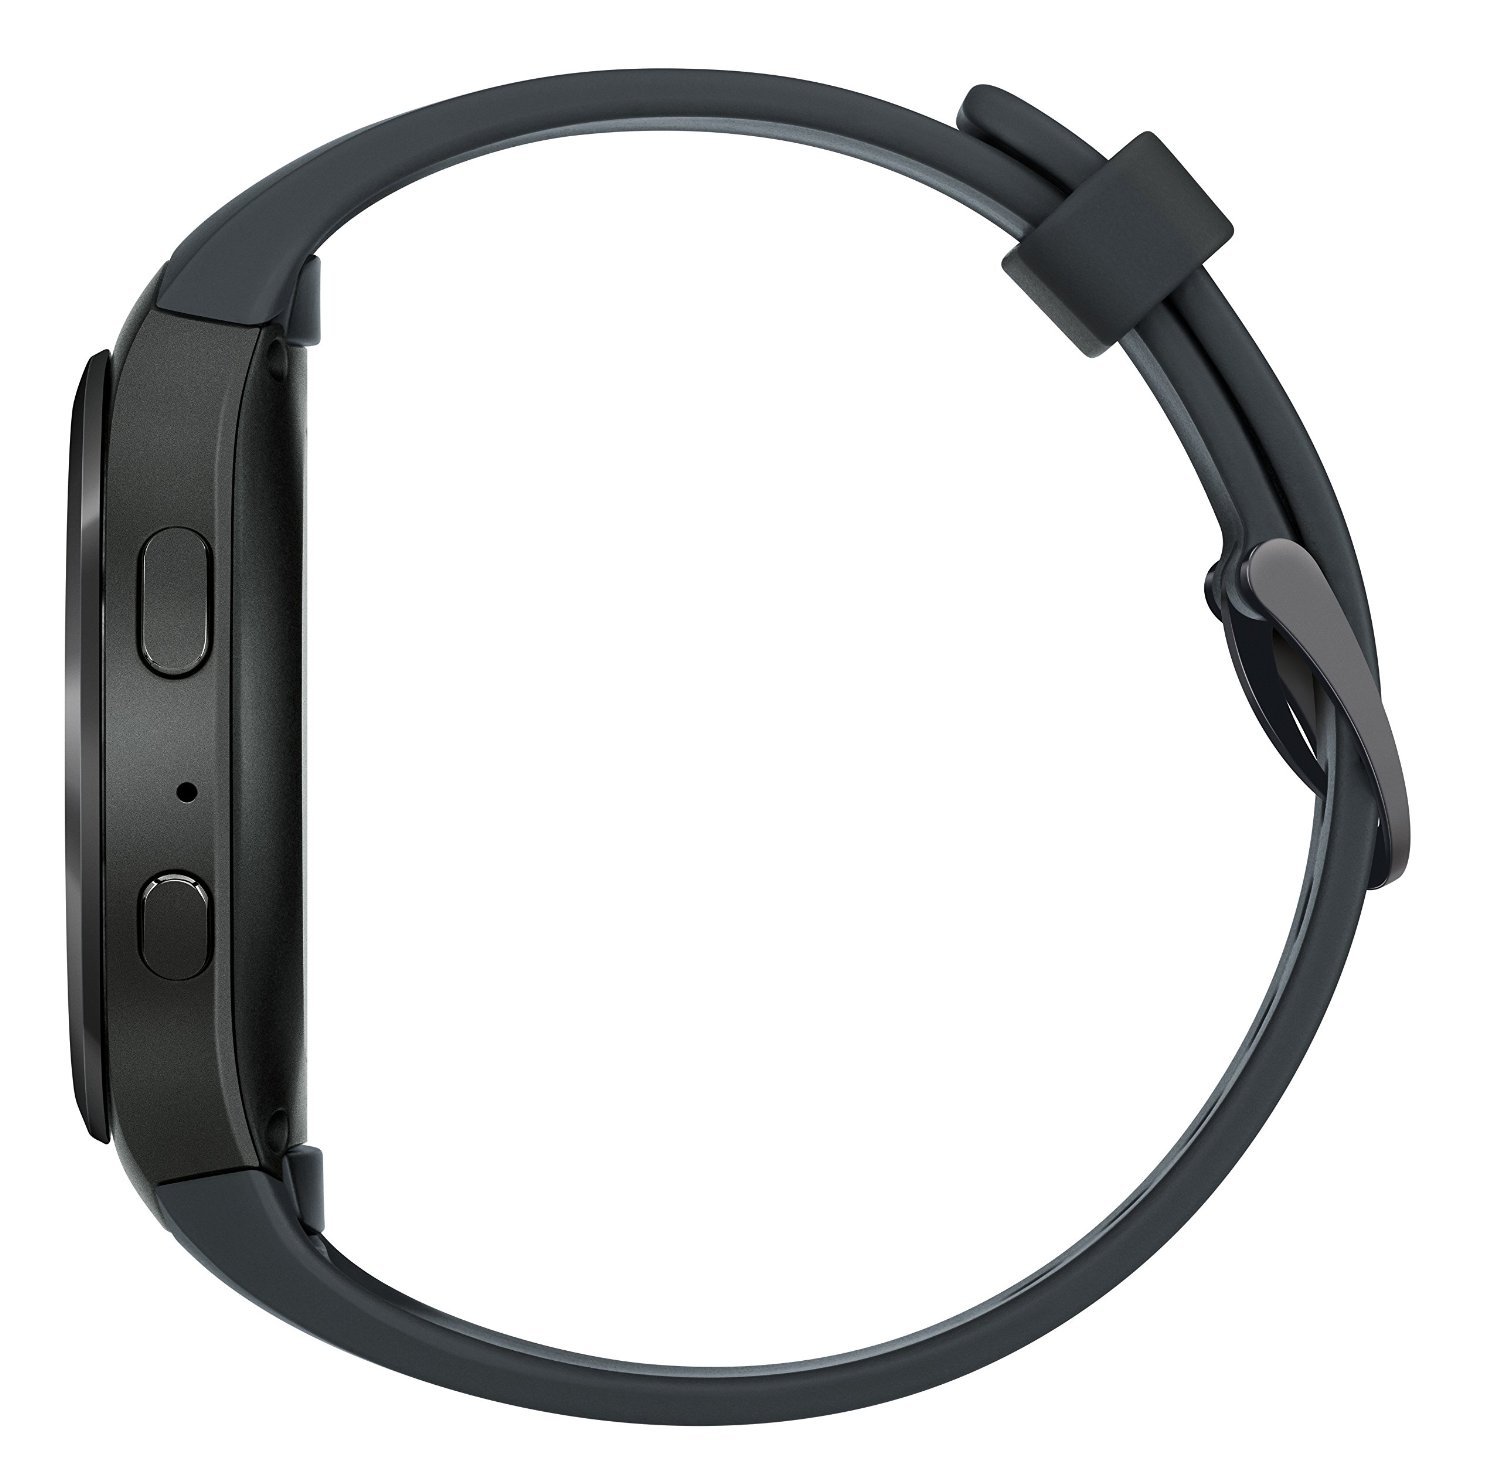 Samsung Gear S2 Wi-Fi Smartwatch - Fitness Tracker - Dark Gray (Renewed)